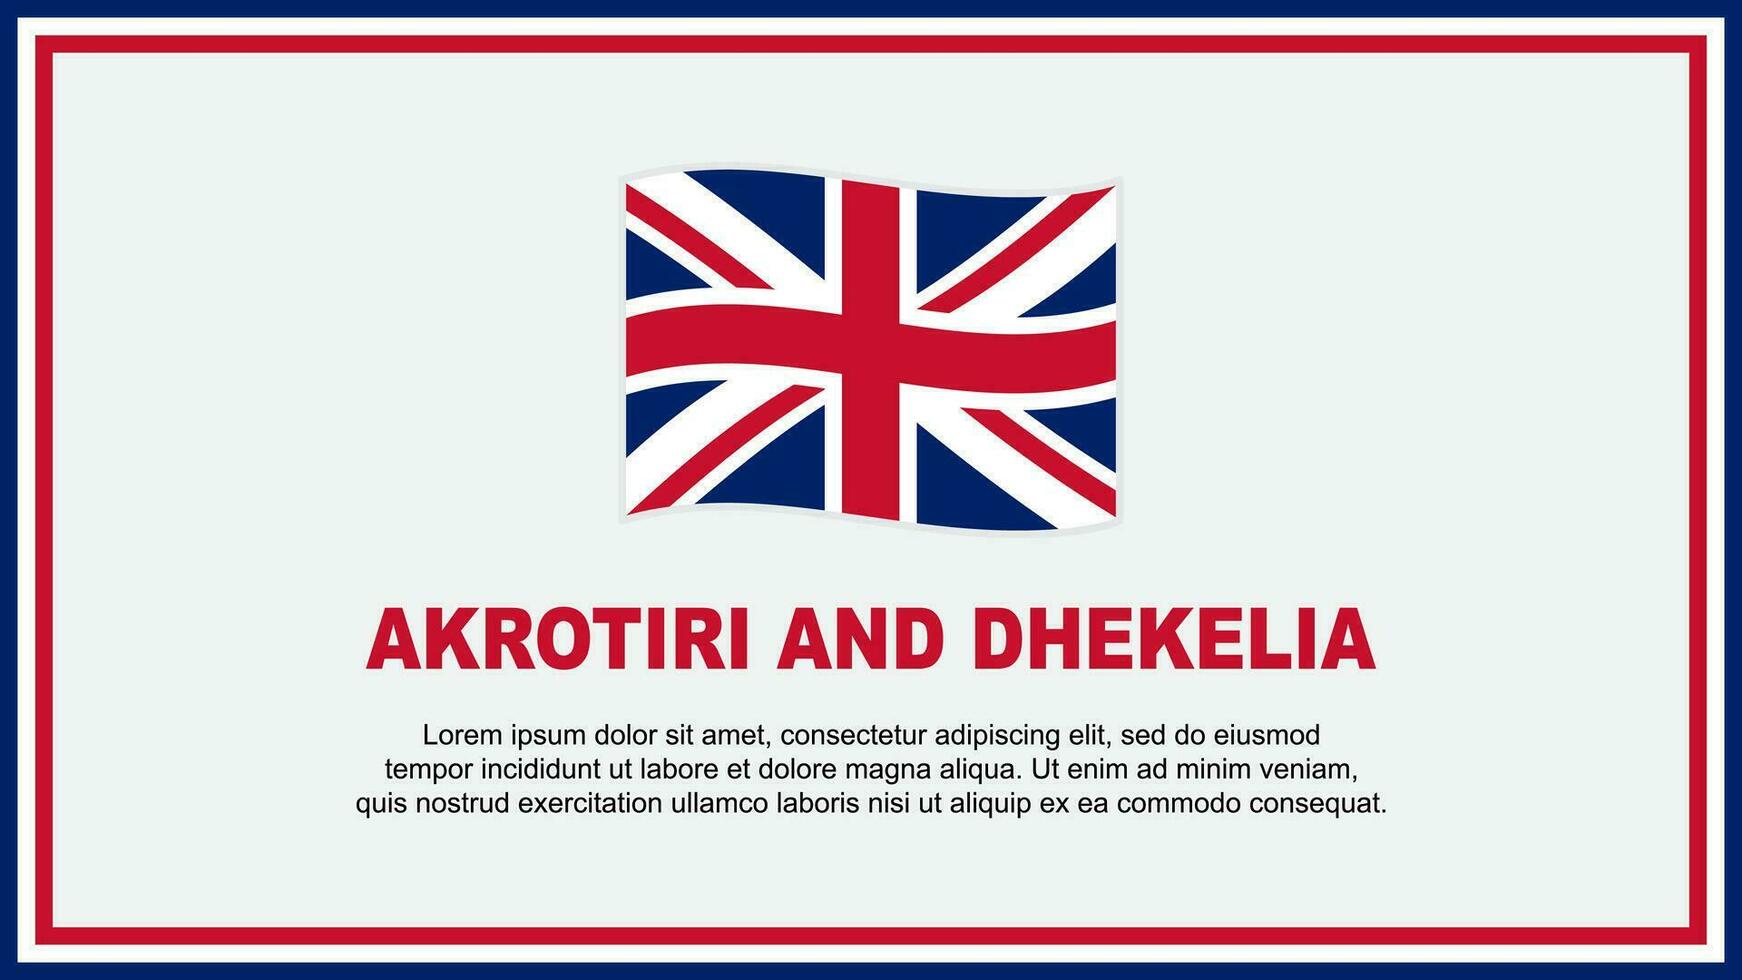 Akrotiri und dhekelia Flagge abstrakt Hintergrund Design Vorlage. Akrotiri und dhekelia Unabhängigkeit Tag Banner Sozial Medien Vektor Illustration. Akrotiri und dhekelia Banner